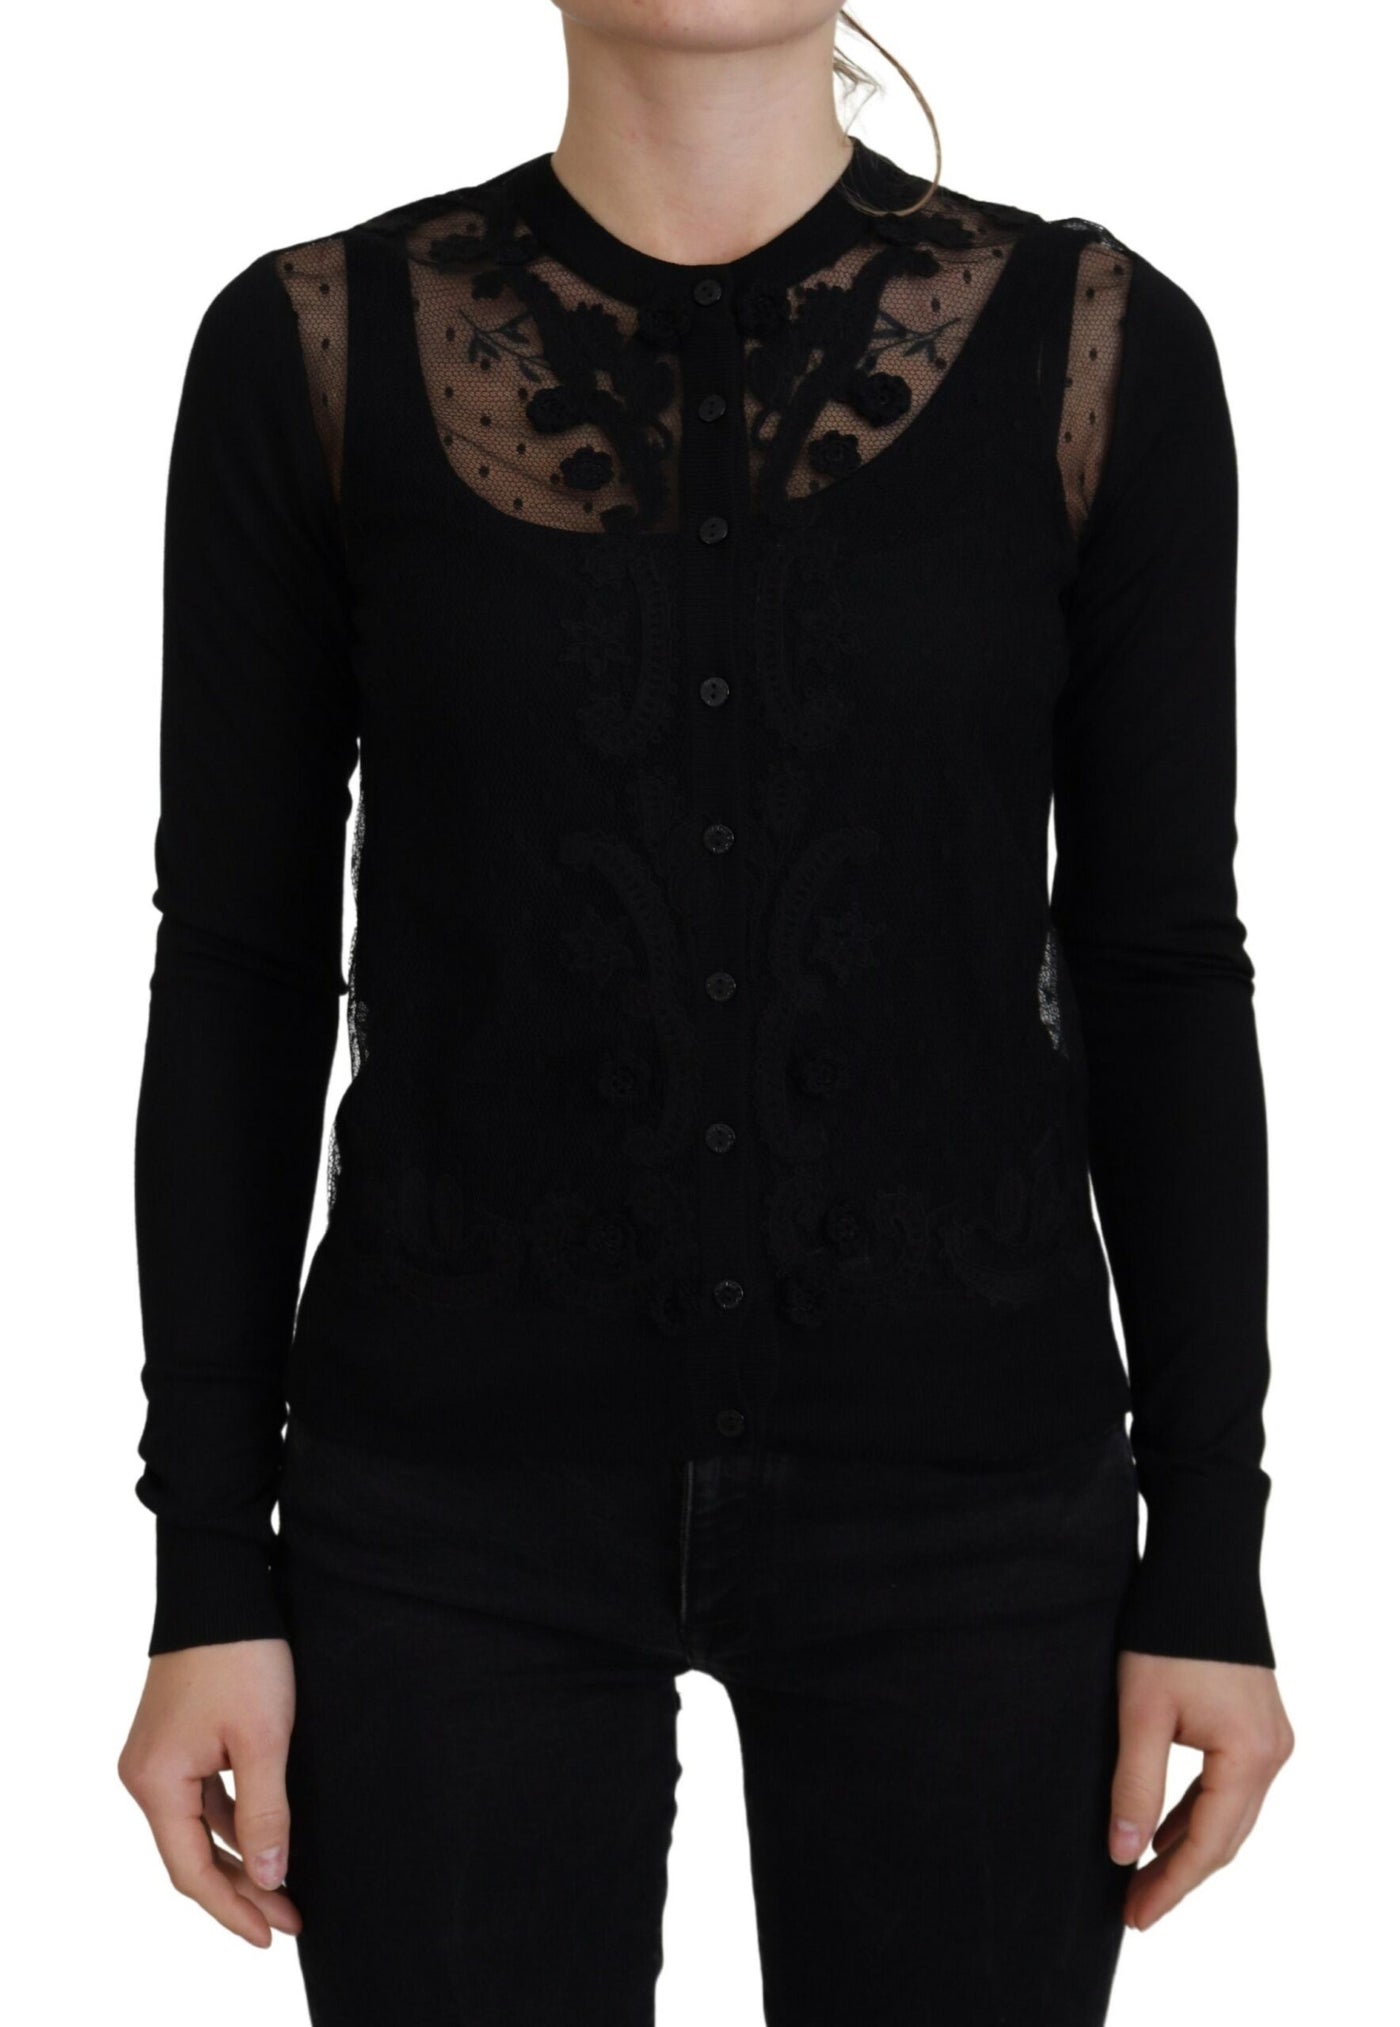 Black Floral Lace Button Cardigan Sweater